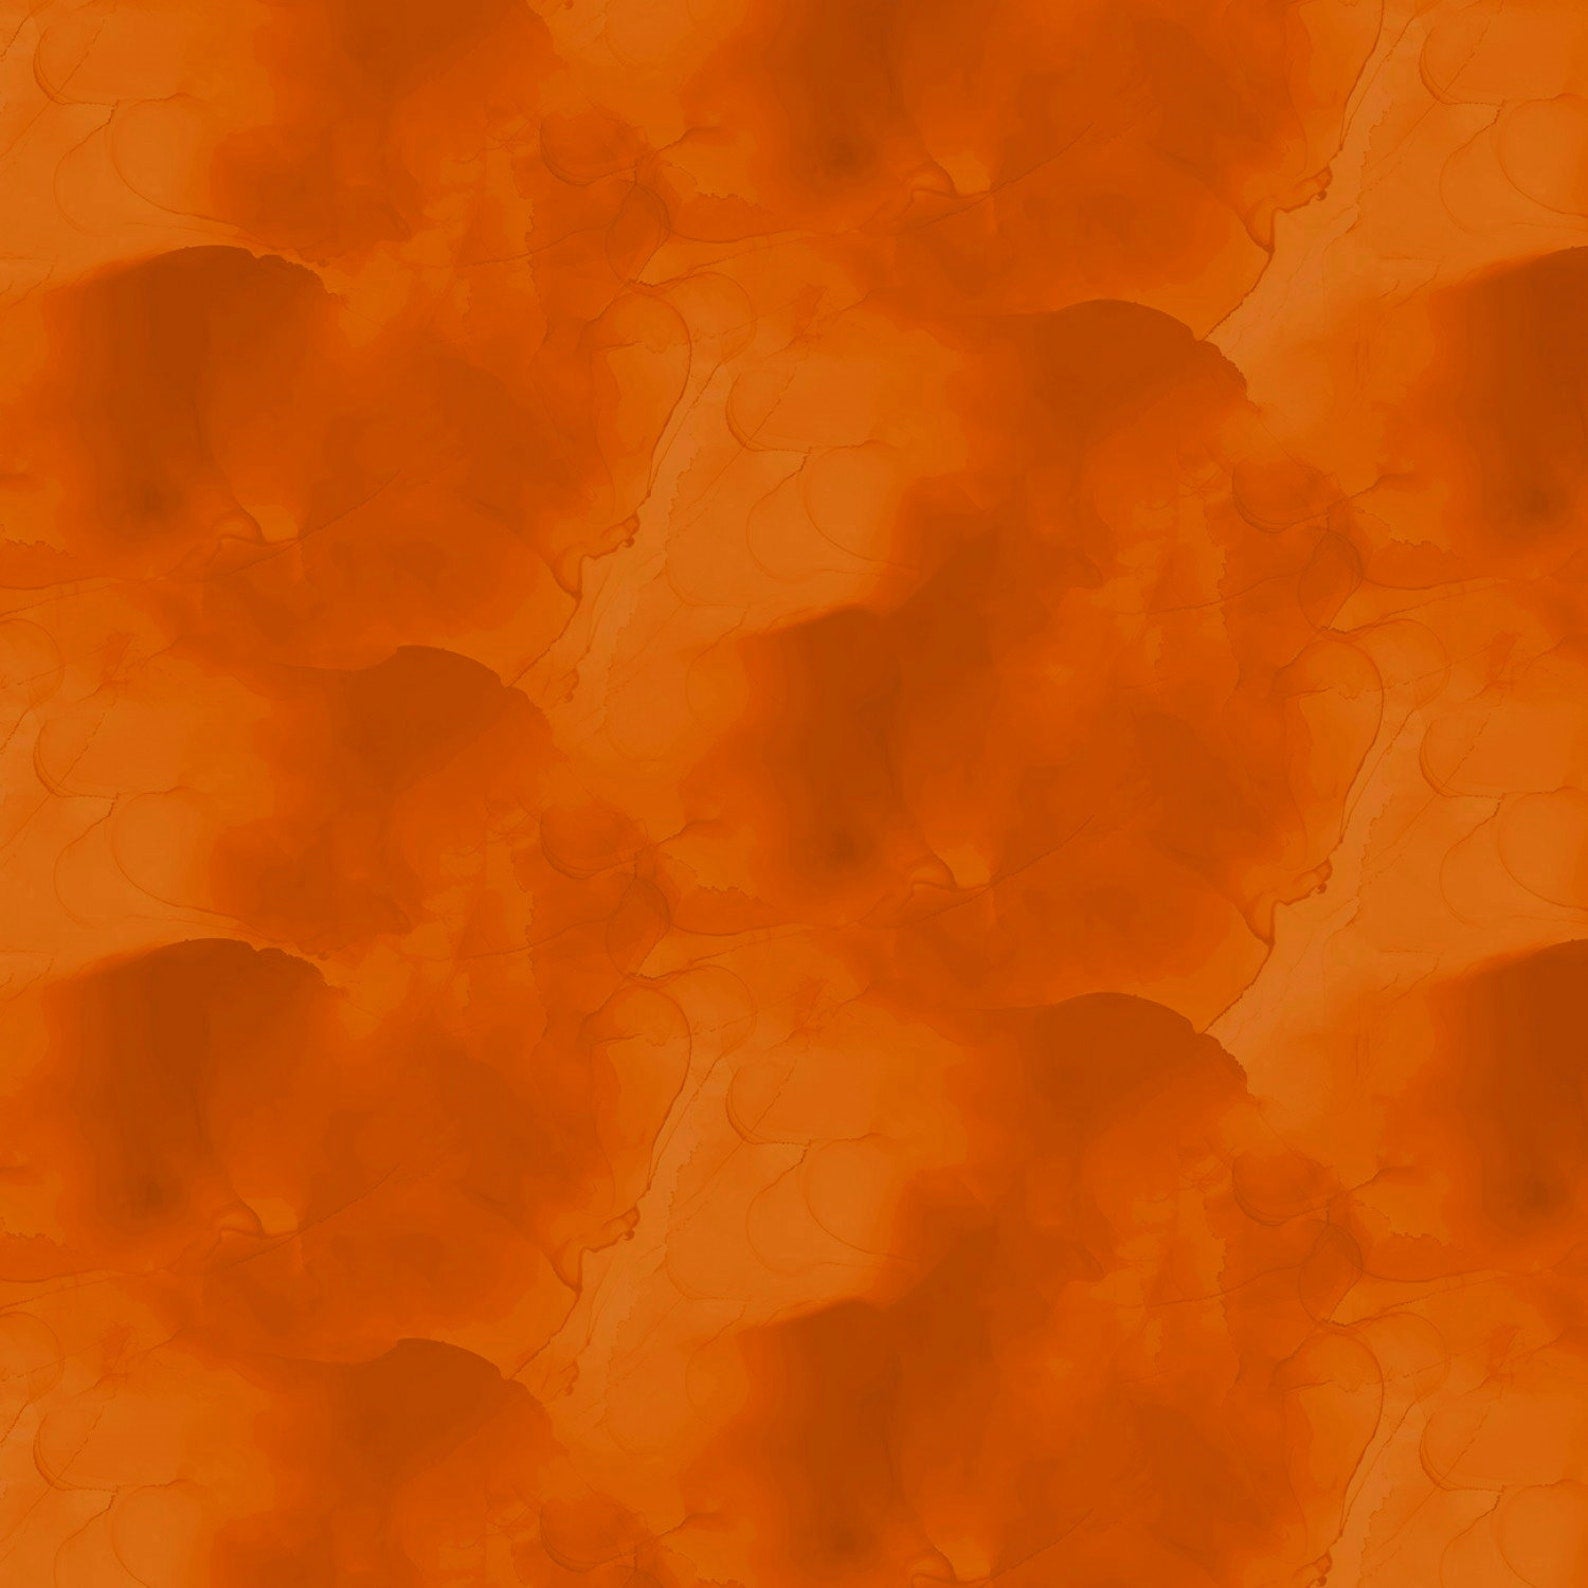 Watercolor Texture Orange